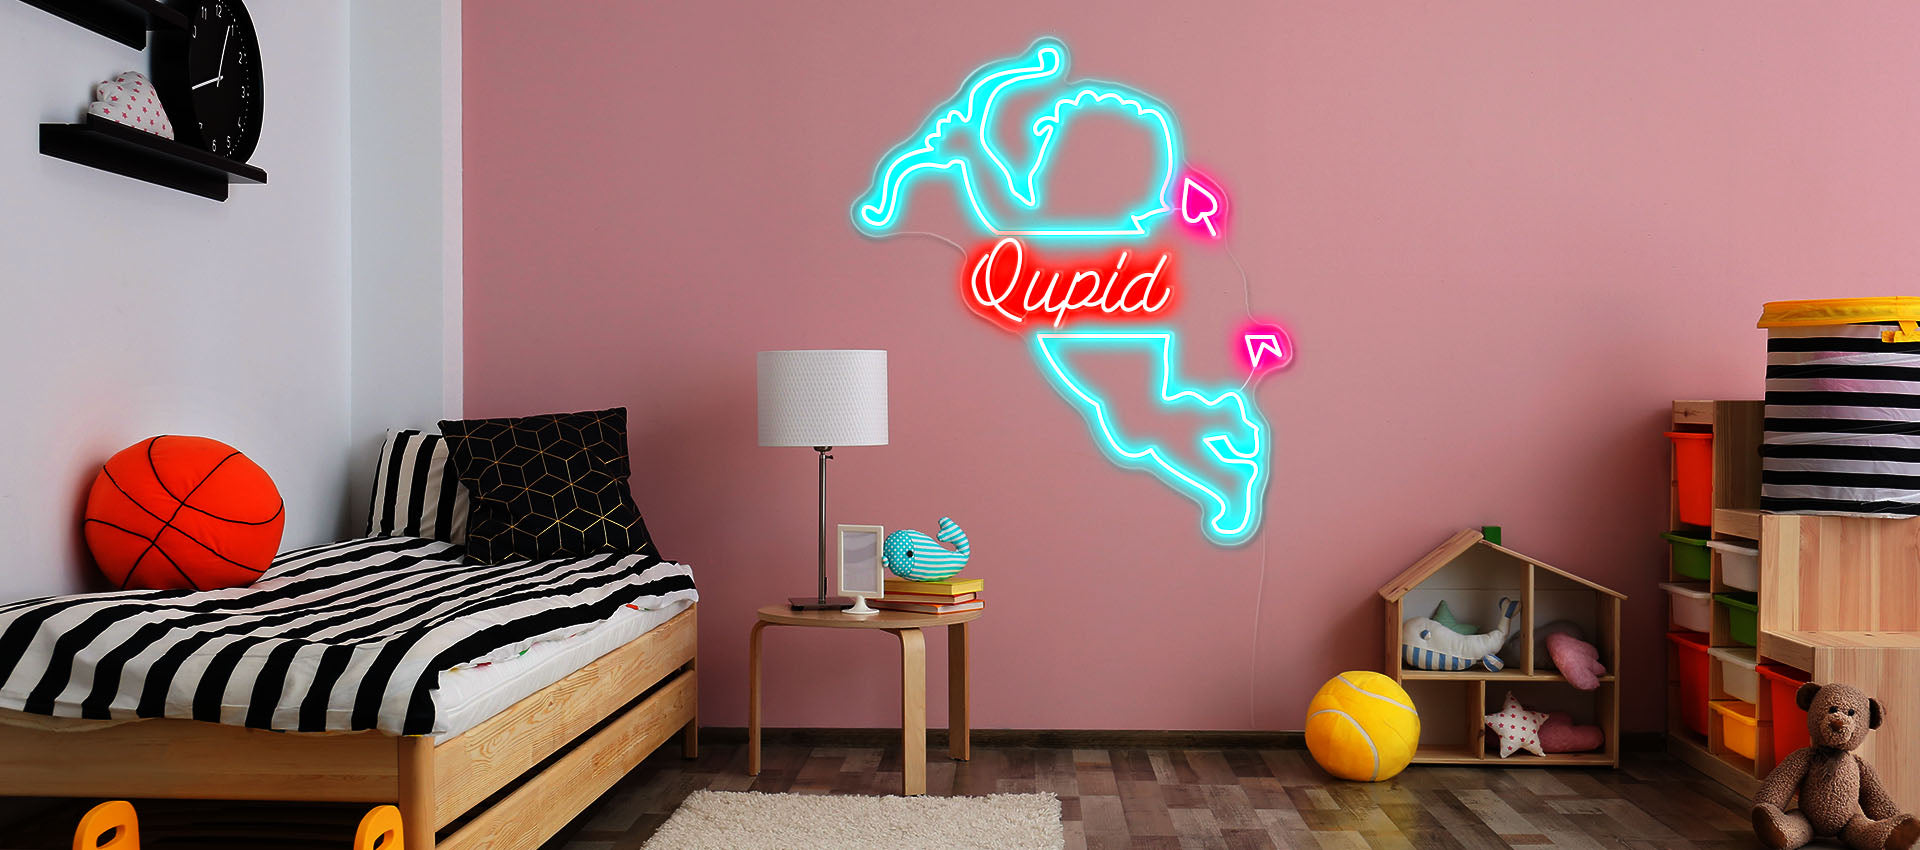 Cupid neon sign